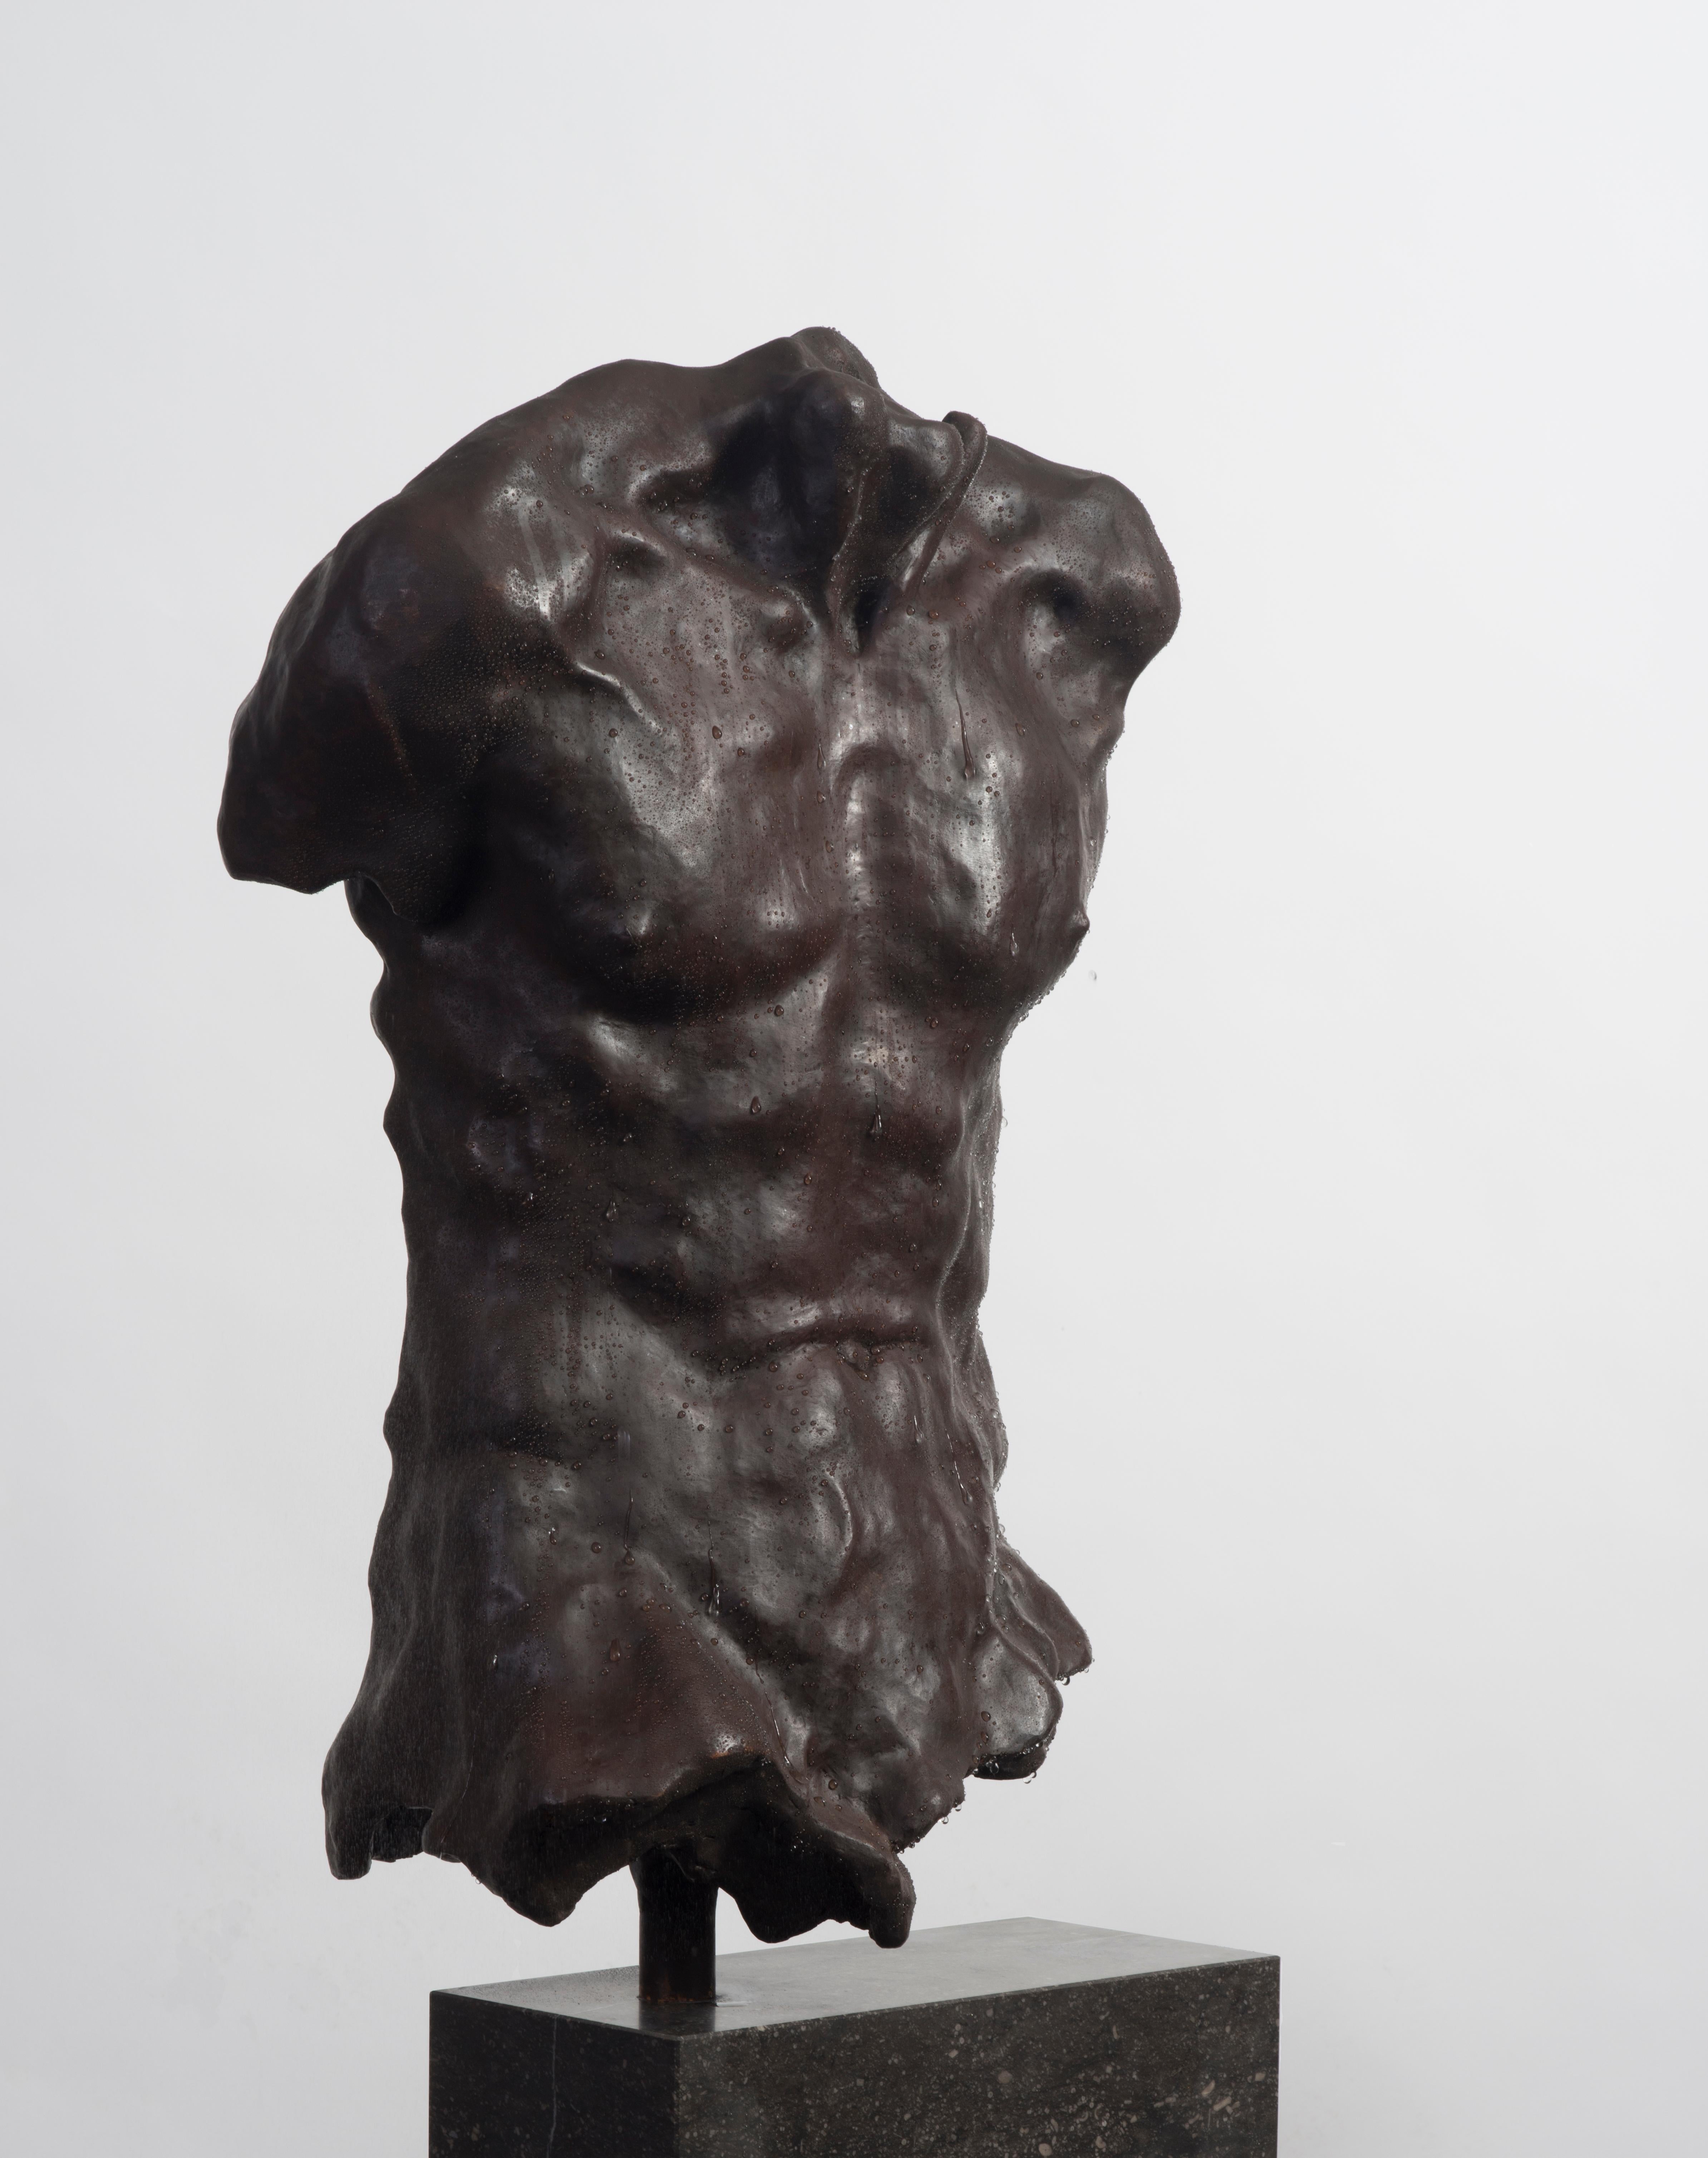 Nude Sculpture Joris Verdonkschot  - Body and Soul - Sculpture en bronze - Nu masculin en forme de torse - En stock 